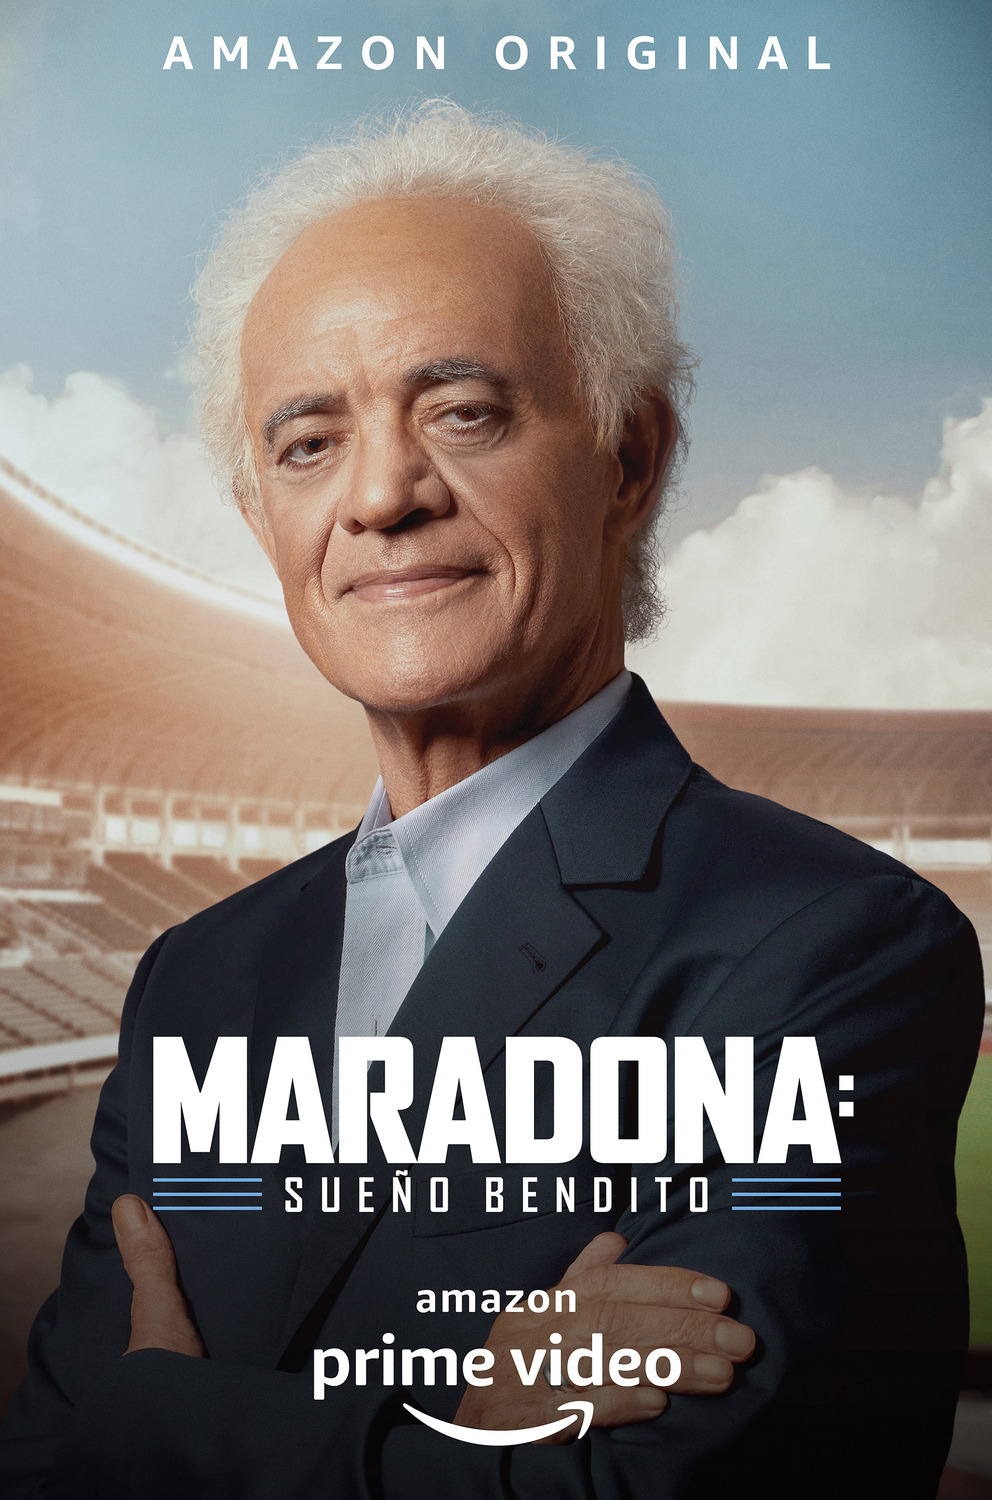 Extra Large TV Poster Image for Maradona, sueño bendito (#6 of 21)